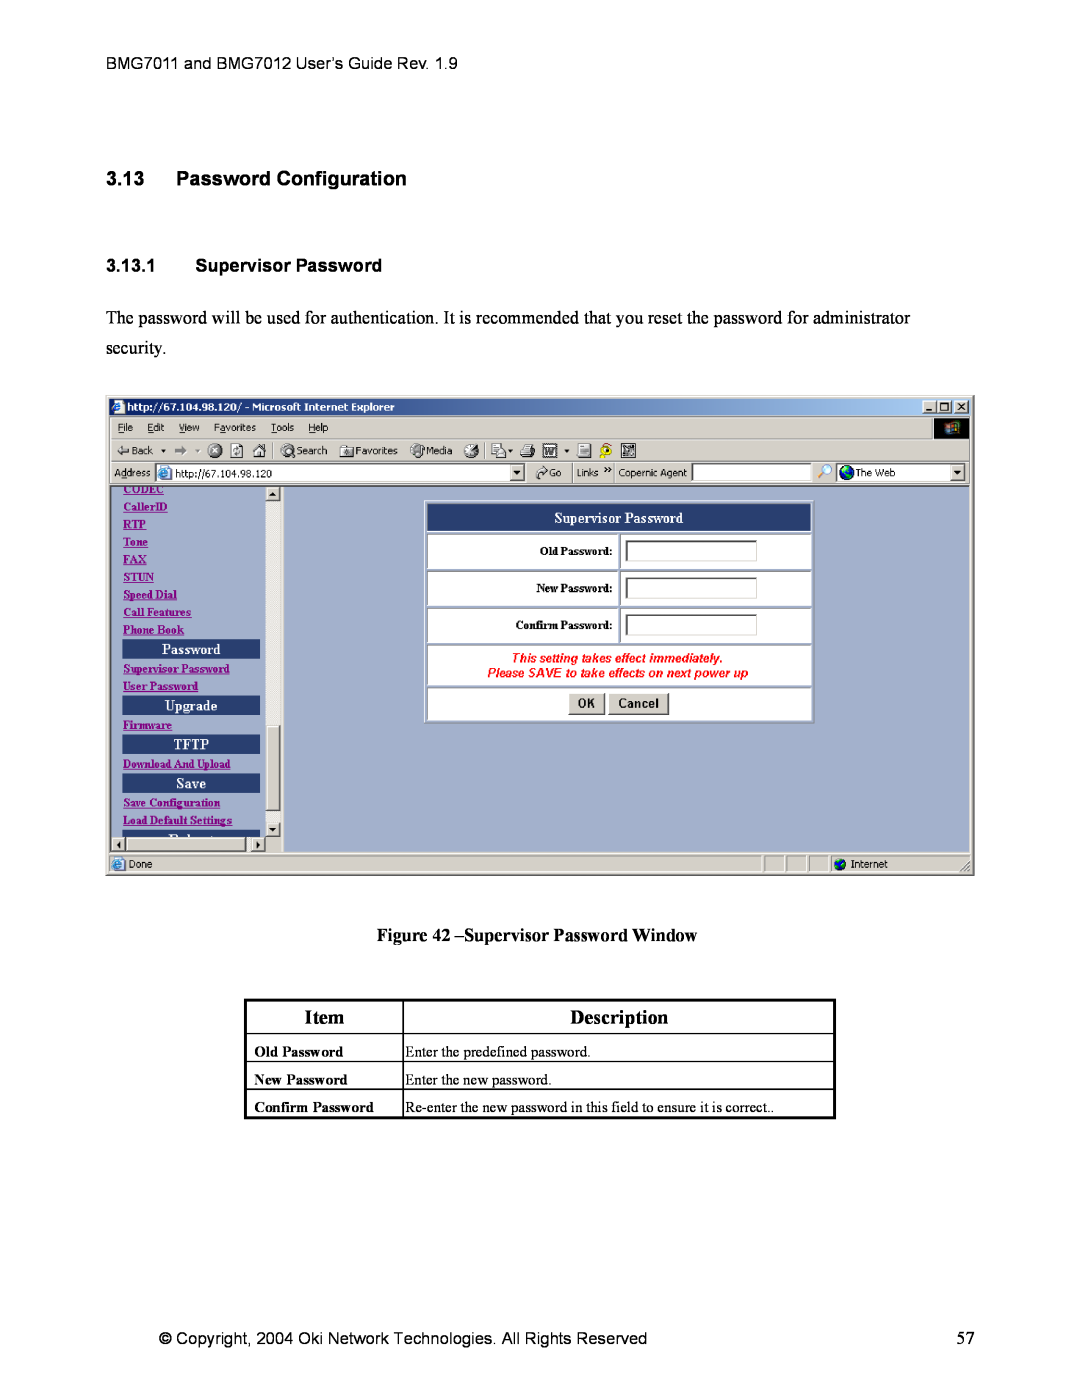 Oki BMG7011 3.13Password Configuration, 3.13.1Supervisor Password, SupervisorPassword Window, Description, Old Password 